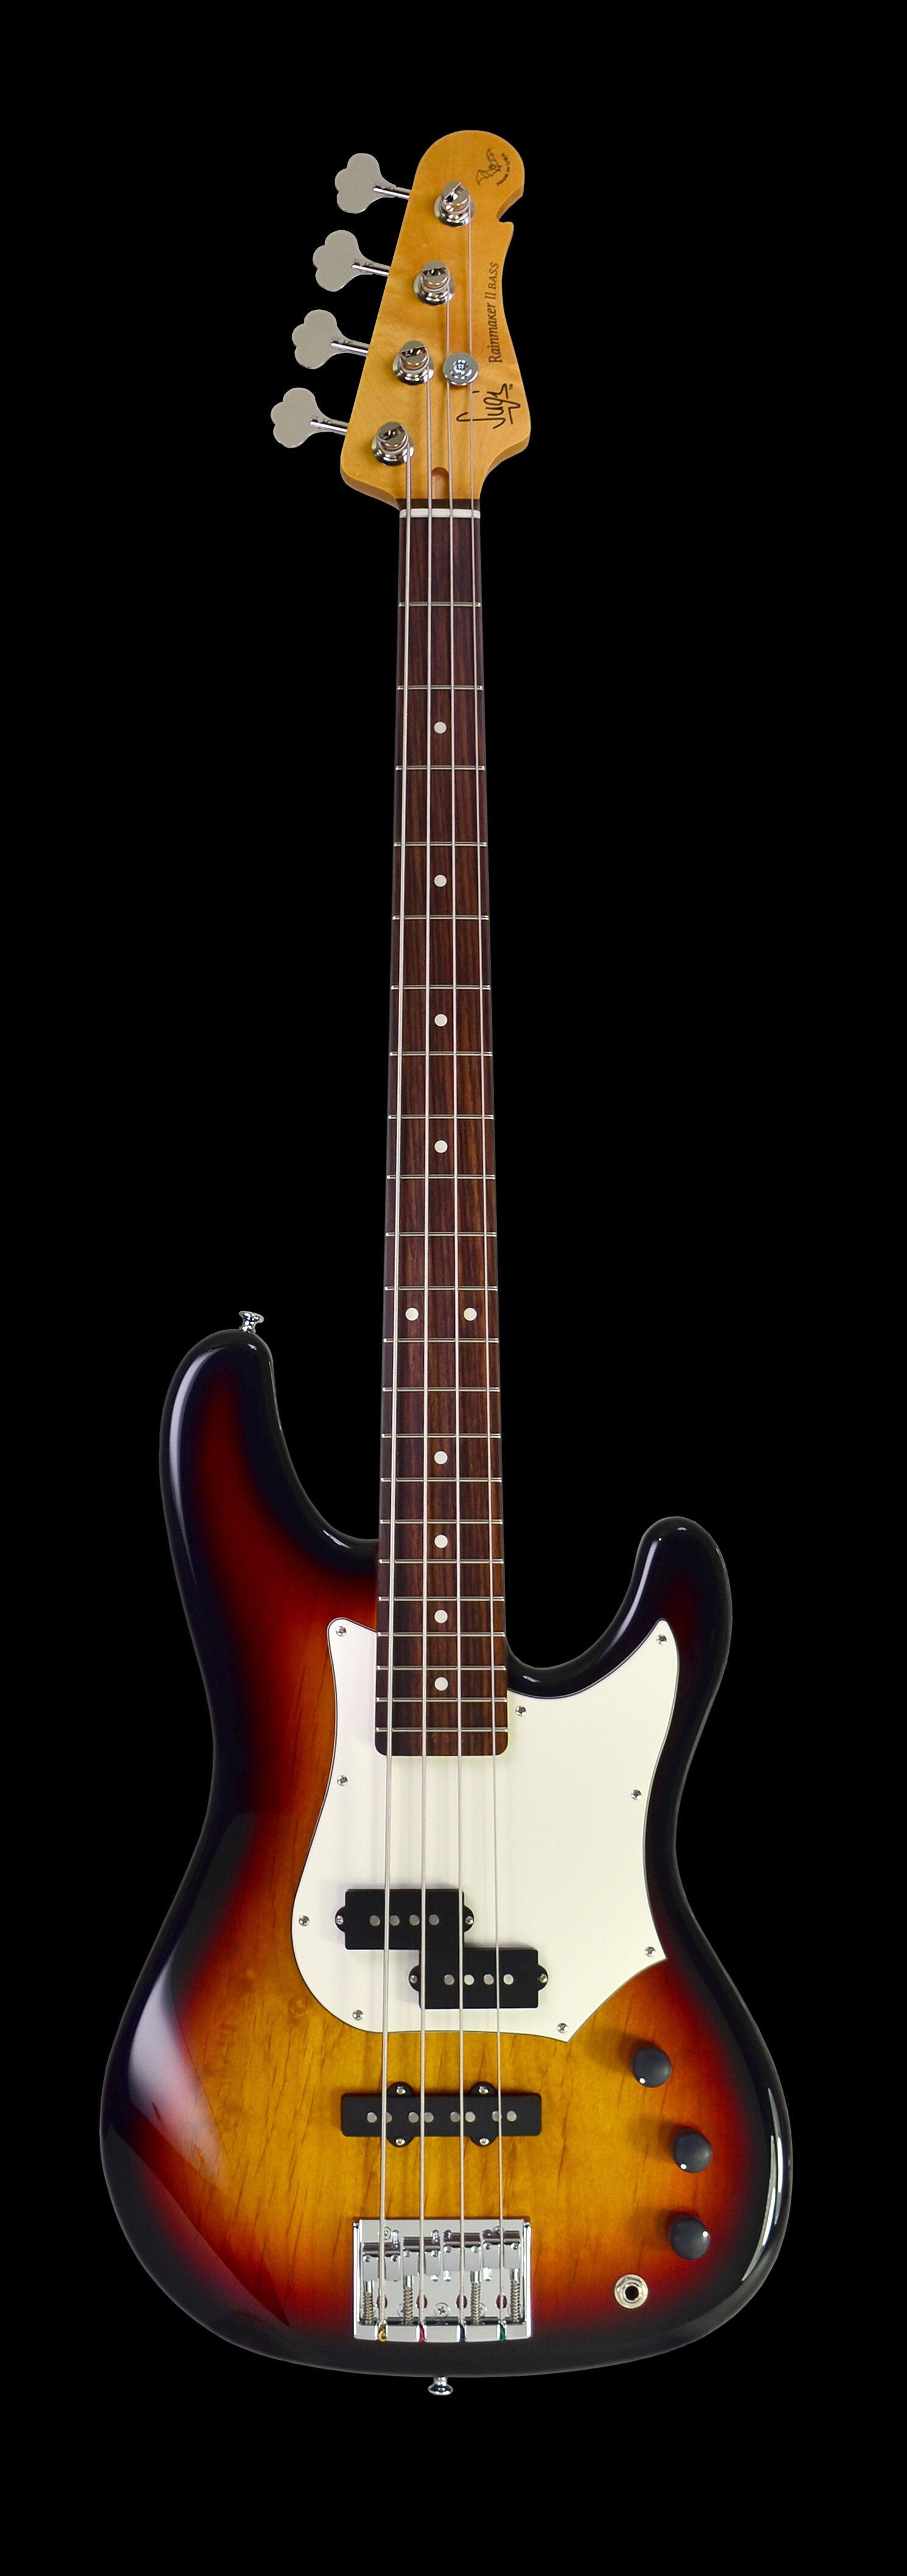 3-color Bass Full Front.jpg